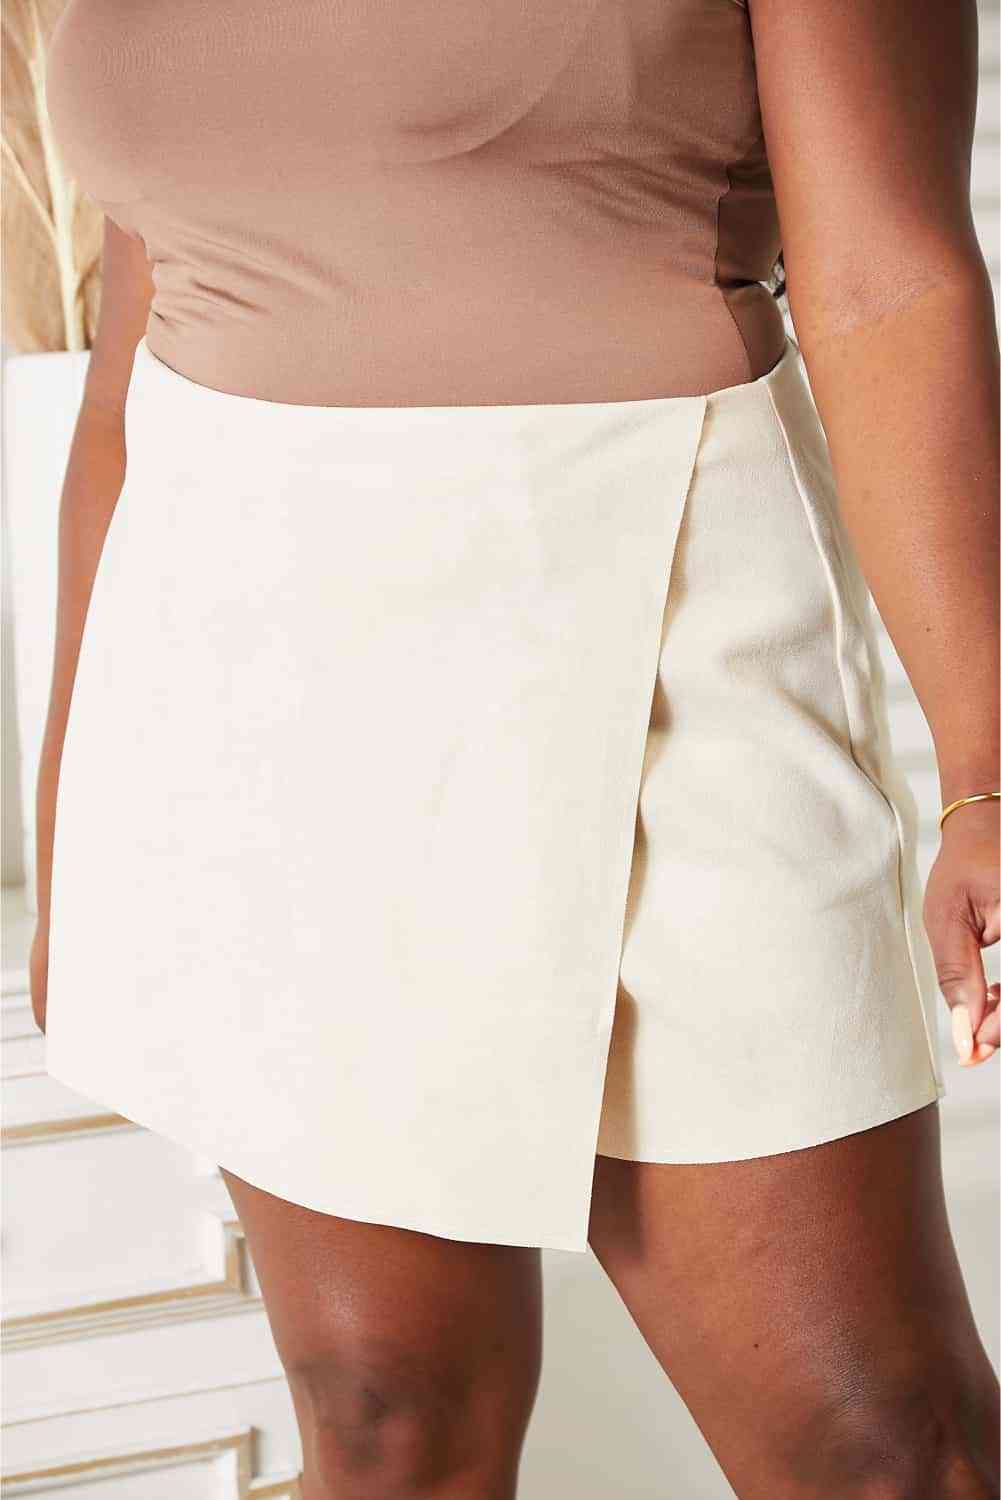 Minifalda pantalón HEYSON de tamaño completo